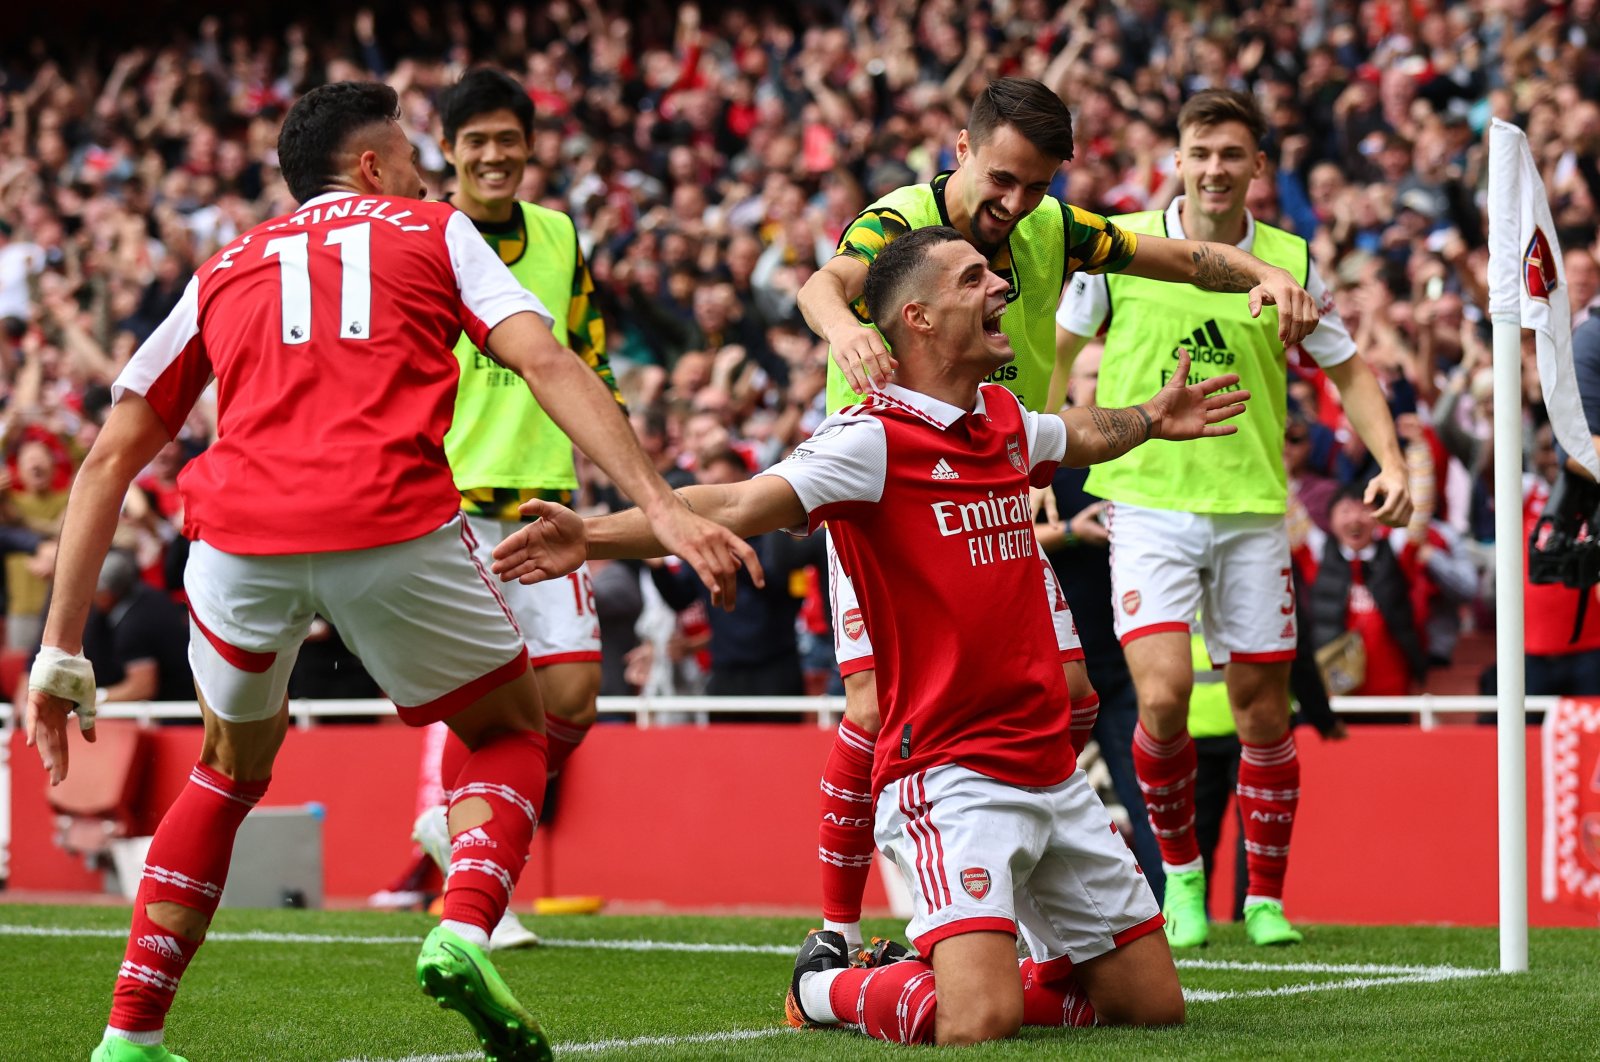 ‘Fenomena’ Arsenal menenggelamkan 10 pemain Spurs 3-1 dalam derby London yang memukau